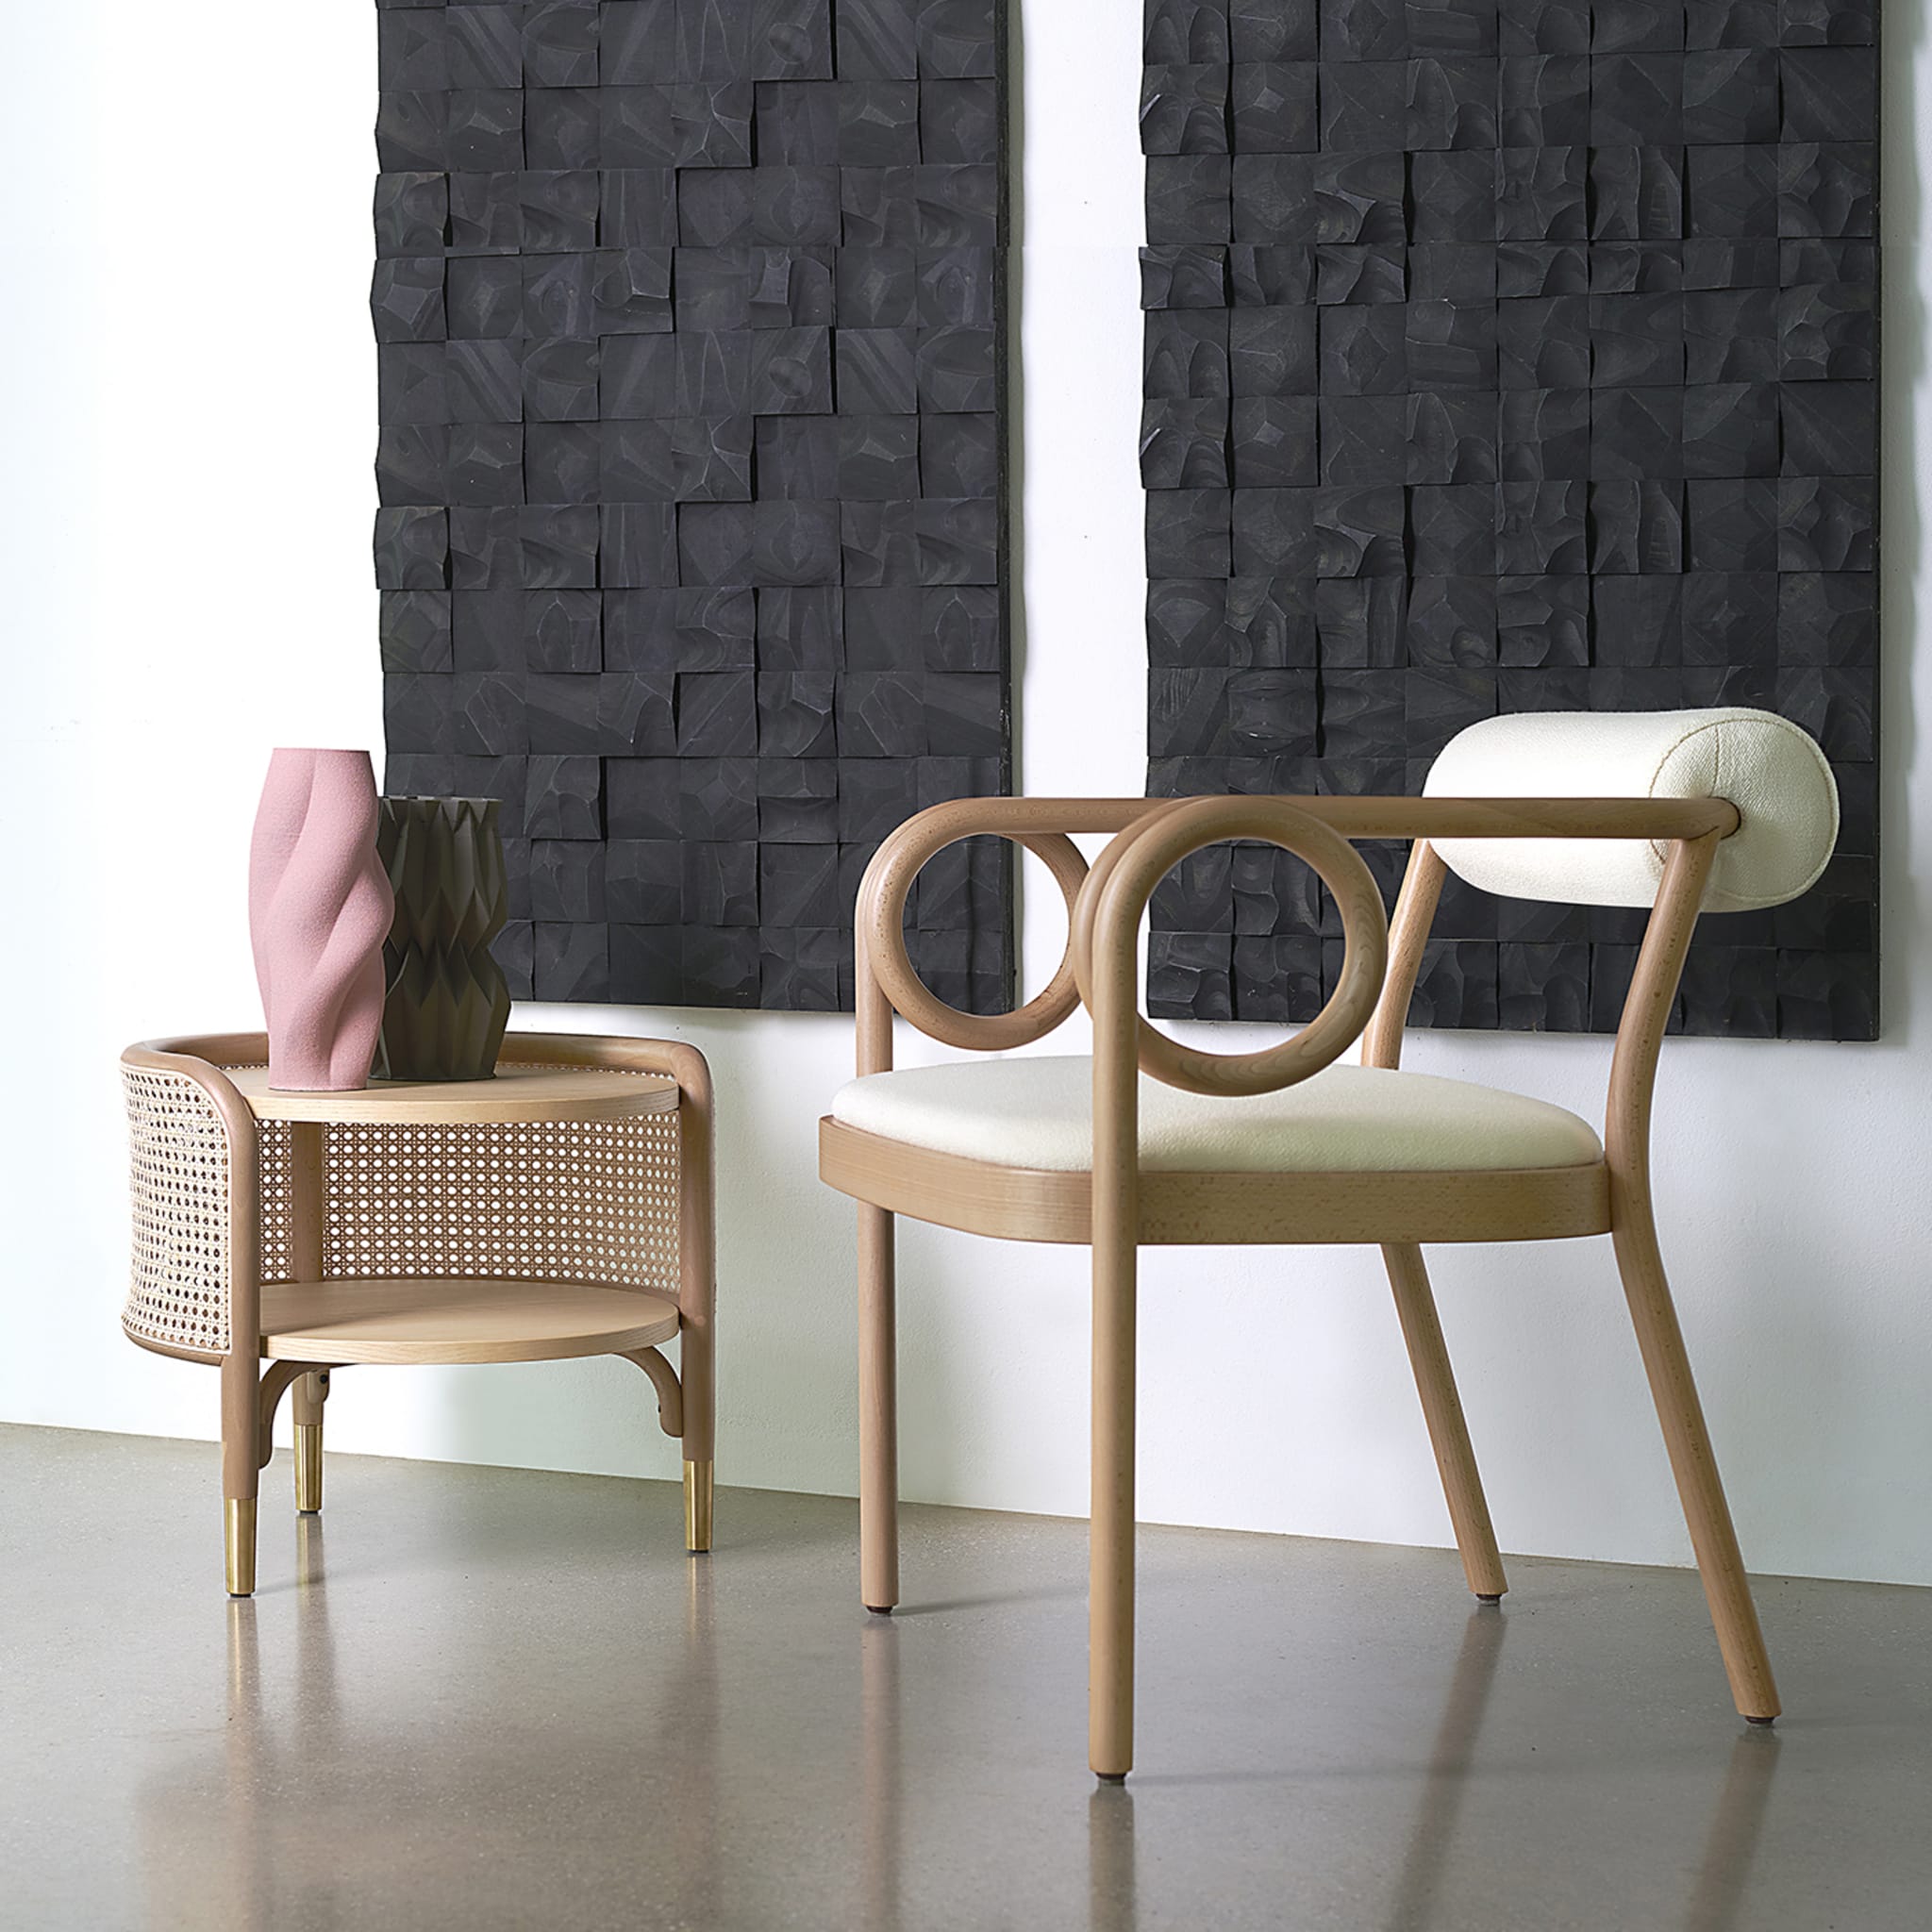 Loop White Lounge Chair by India Mahdavi - Alternative view 5